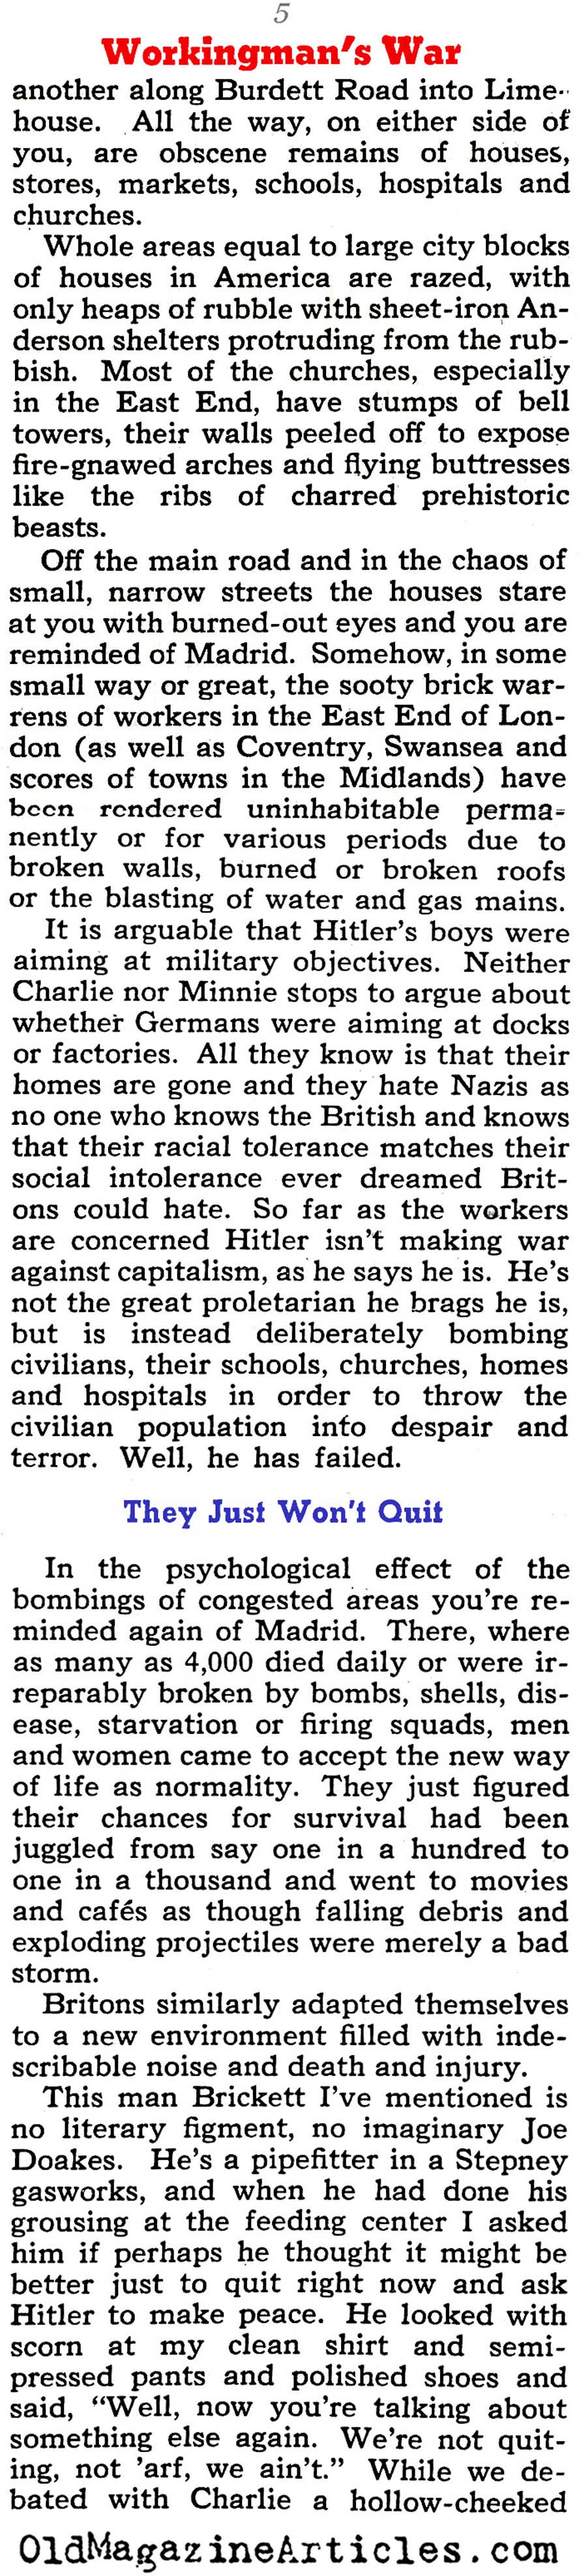 ''Workingman's War'' (Collier's Magazine, 1941)